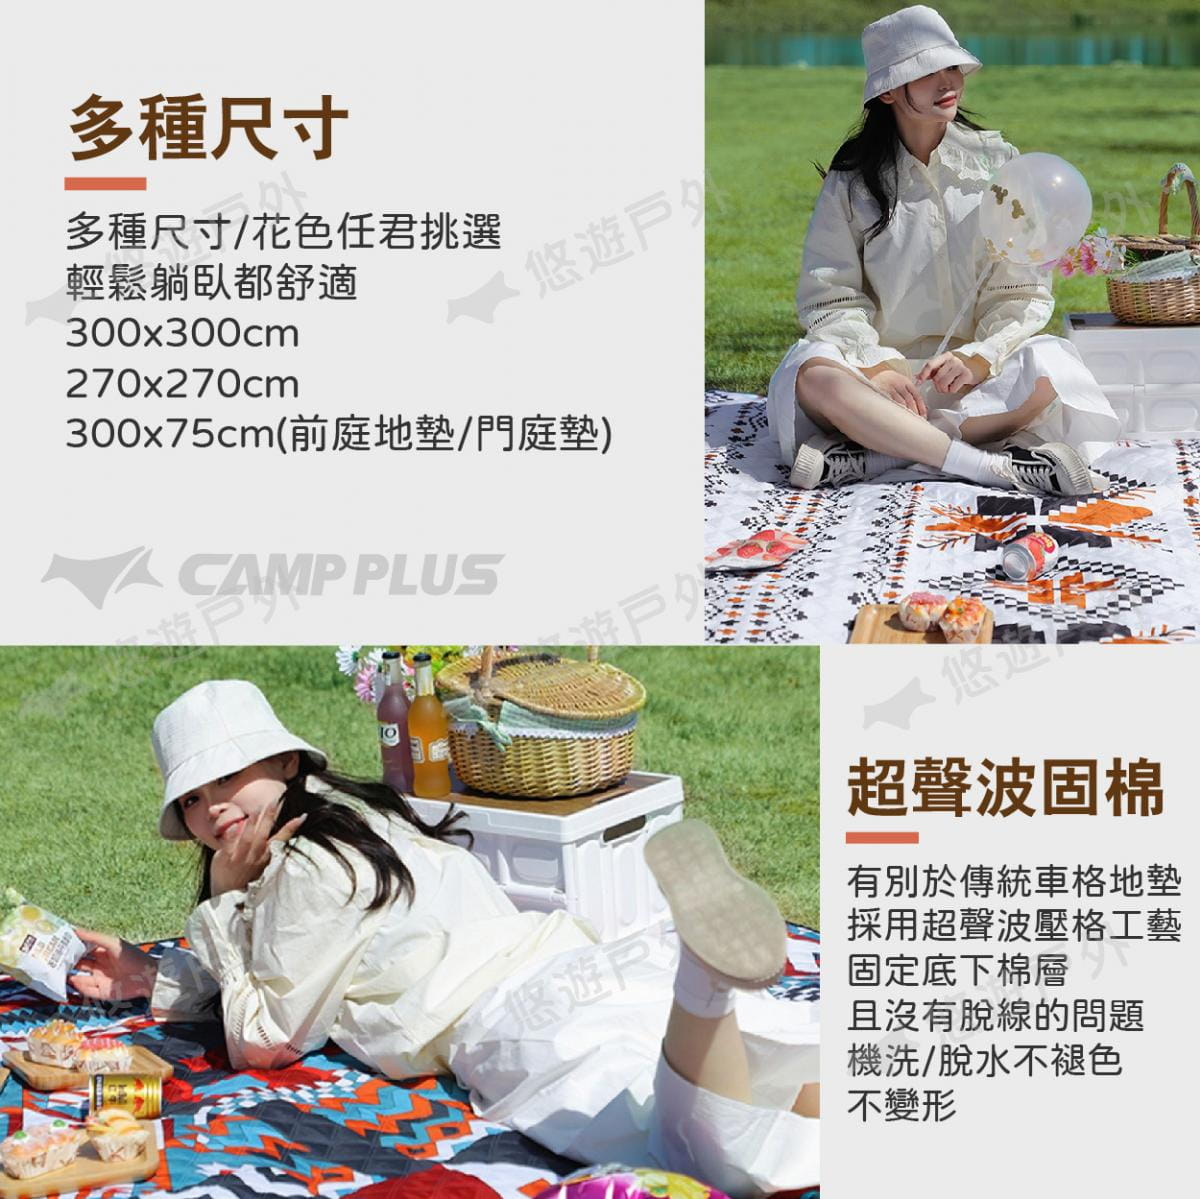 【Camp Plus】超聲波野餐墊 270x270cm 3